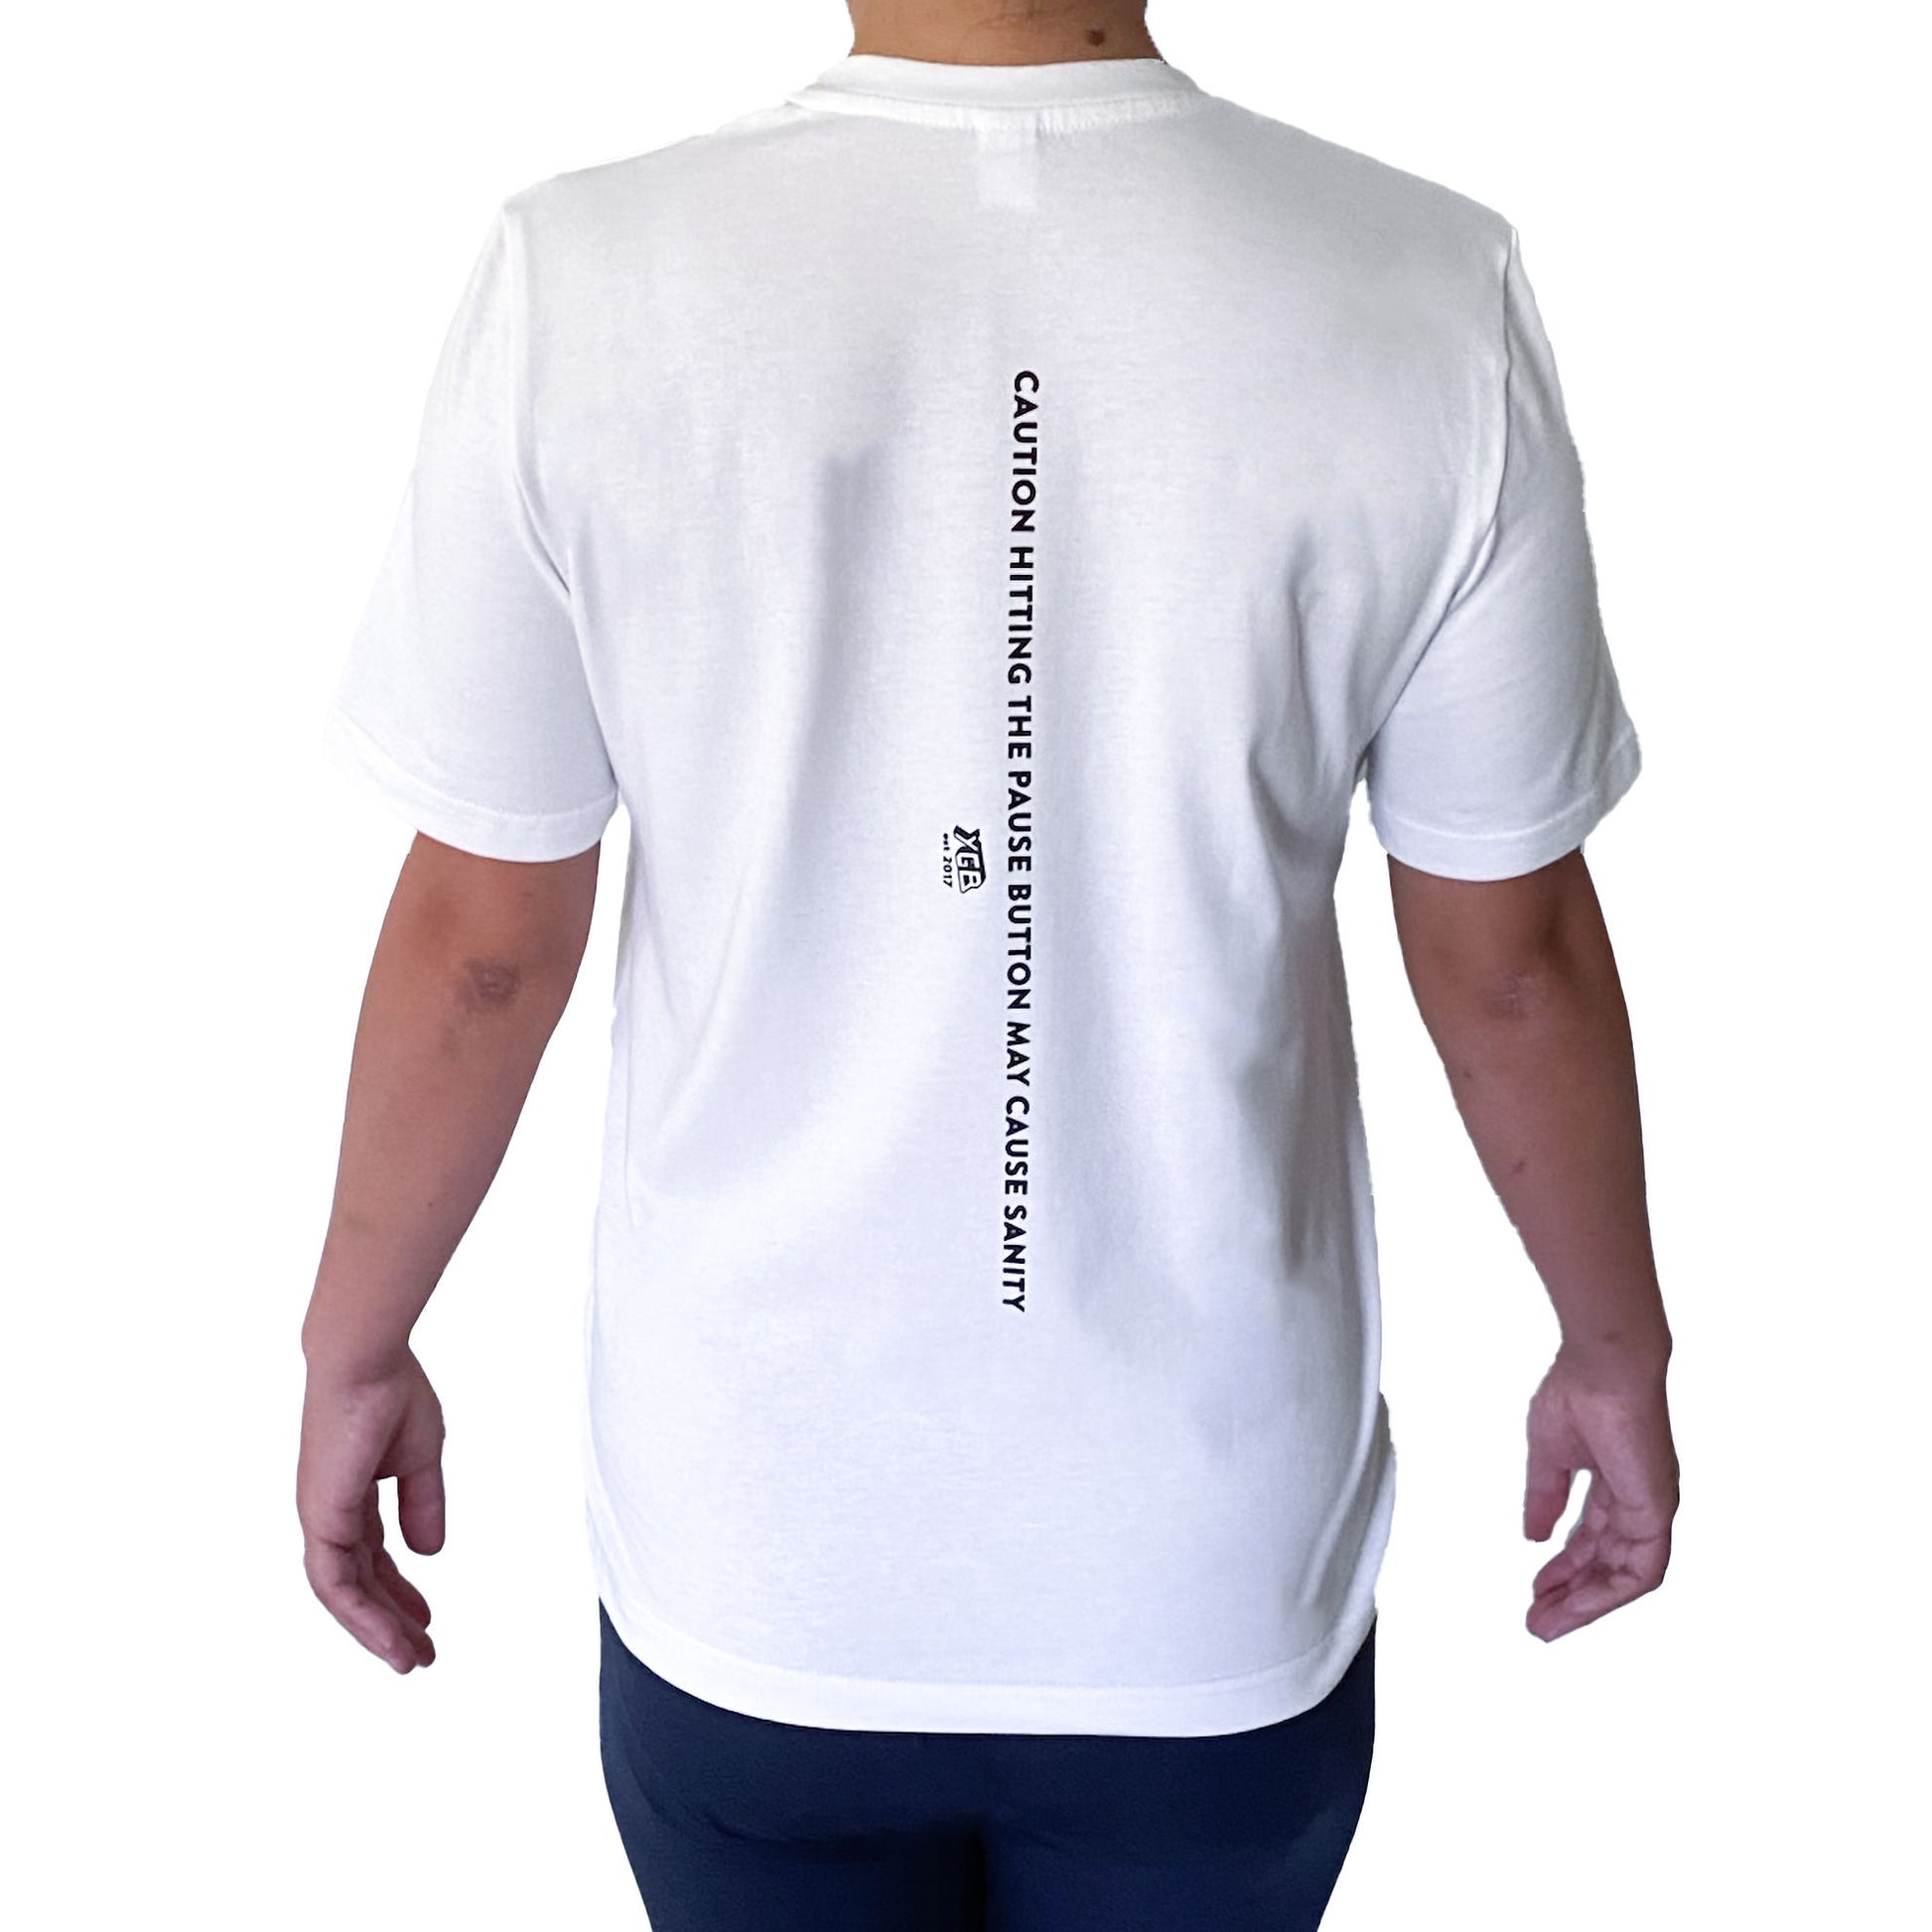 Ethical organic unisex t-shirt White Crew neck Caution